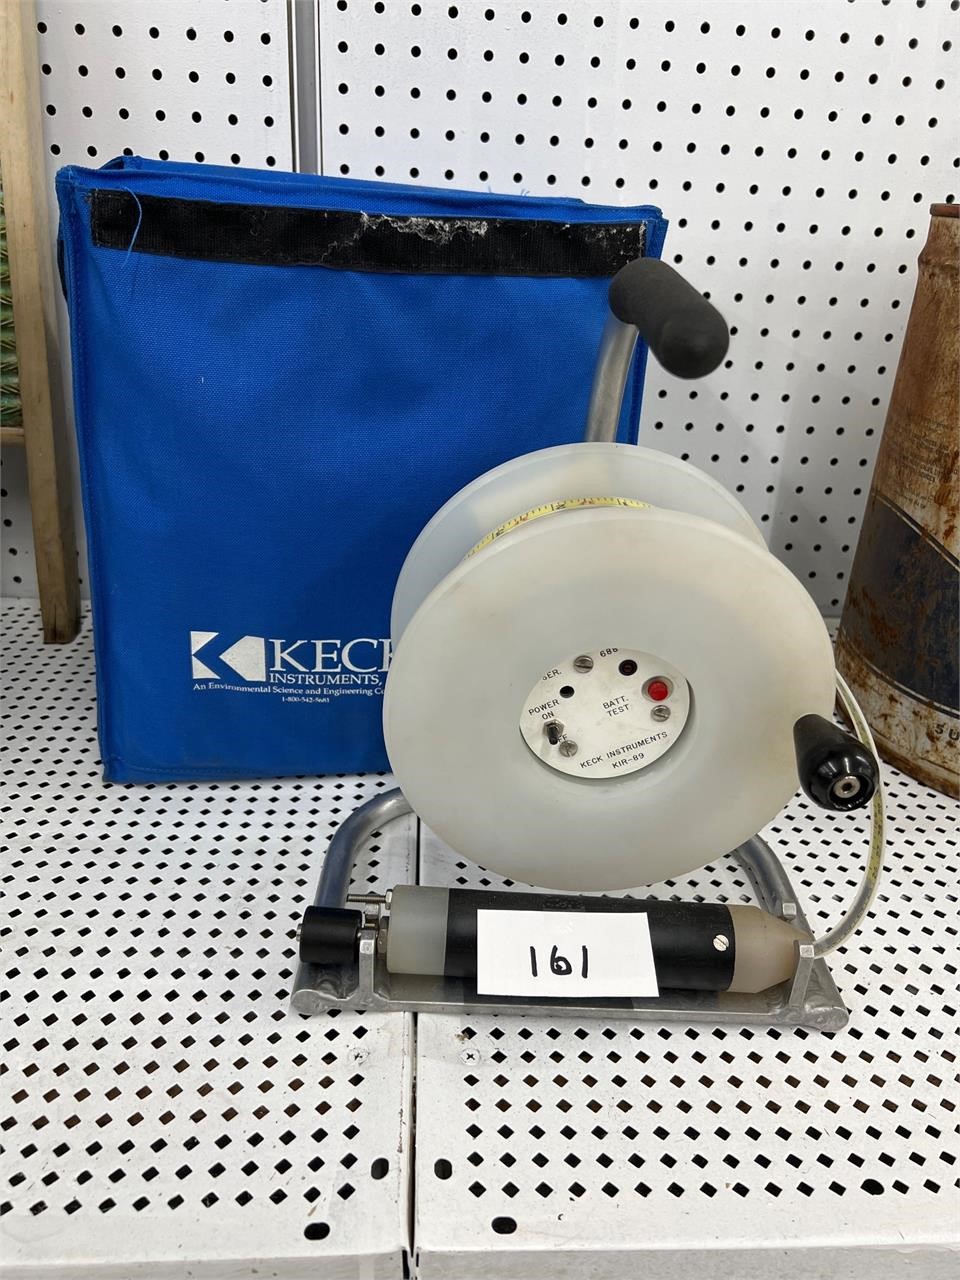 Keck instruments KIR-89 measuring device